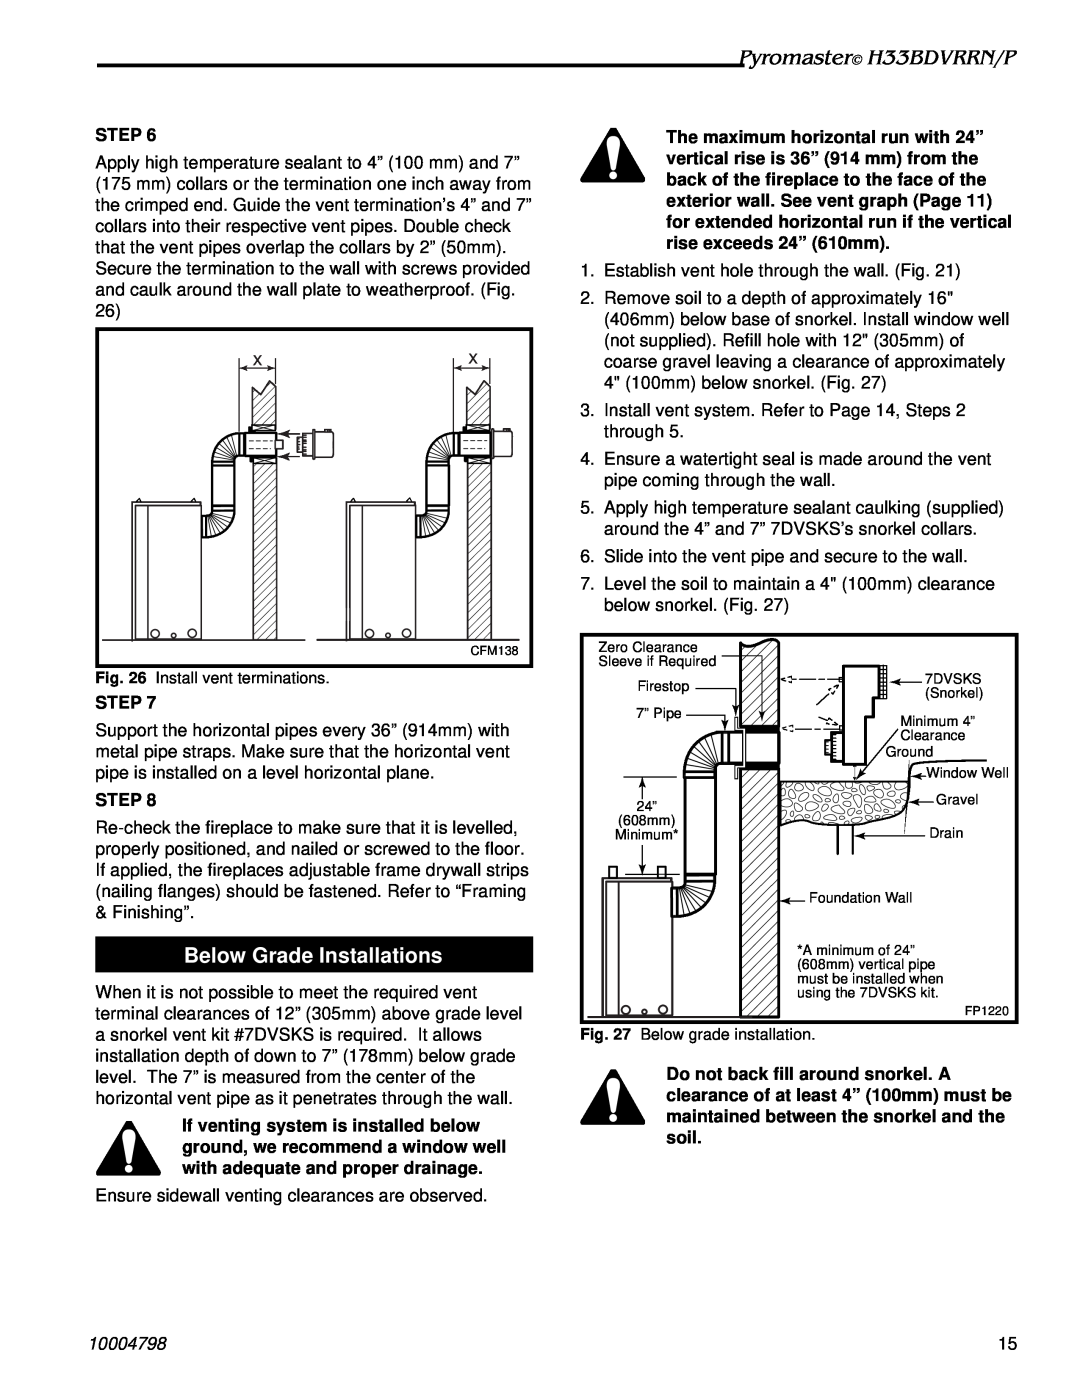 Vermont Casting H33BDVRRNP manual Below Grade Installations, Pyromaster H33BDVRRN/P, Step, 10004798 